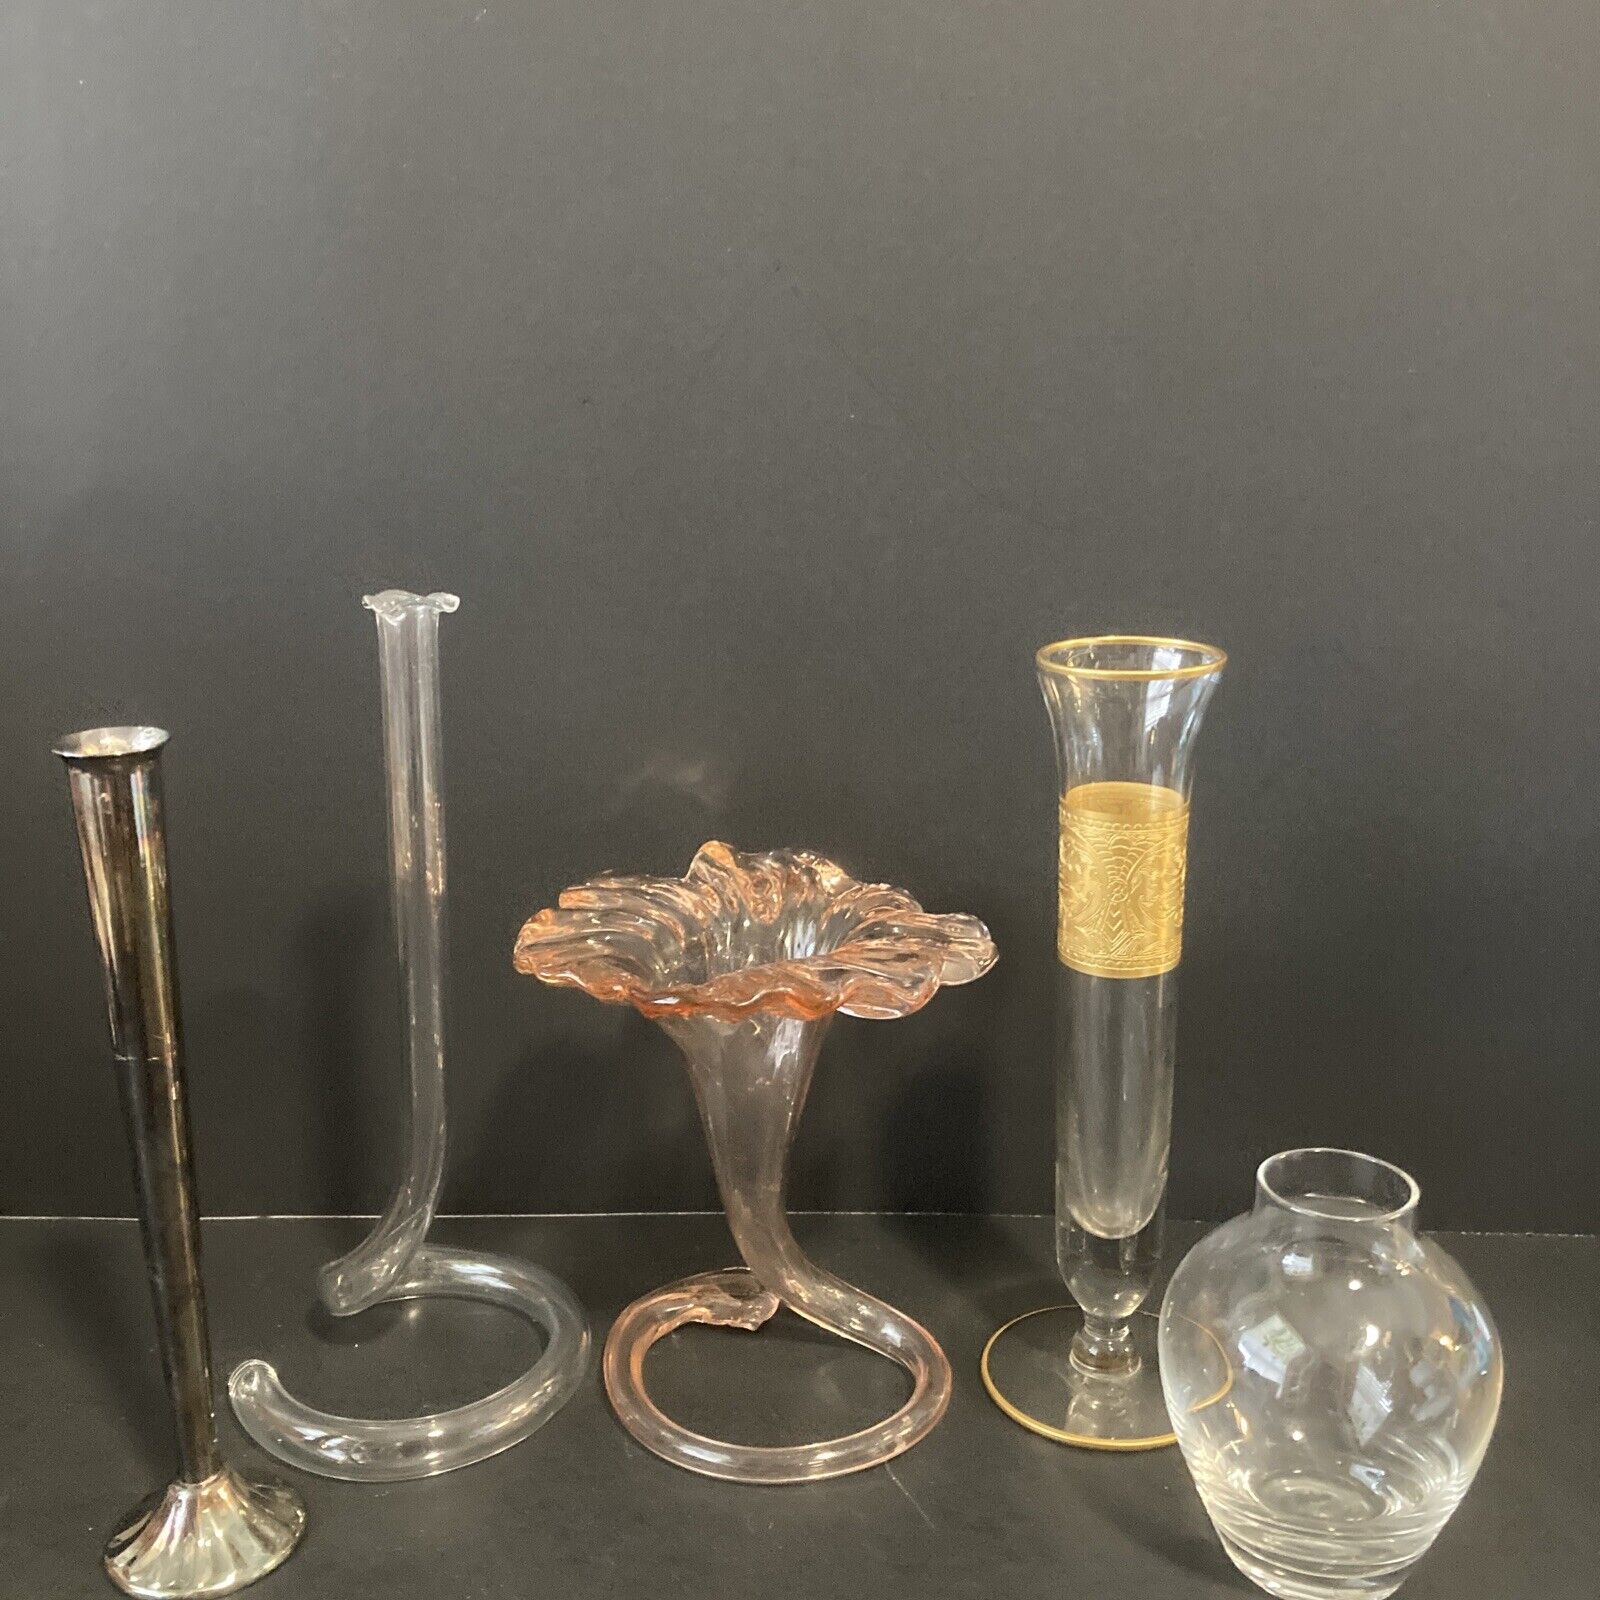 Lot of 5 Vintage Bud Vases Trumpet - Hand Blown glass flute  art deco